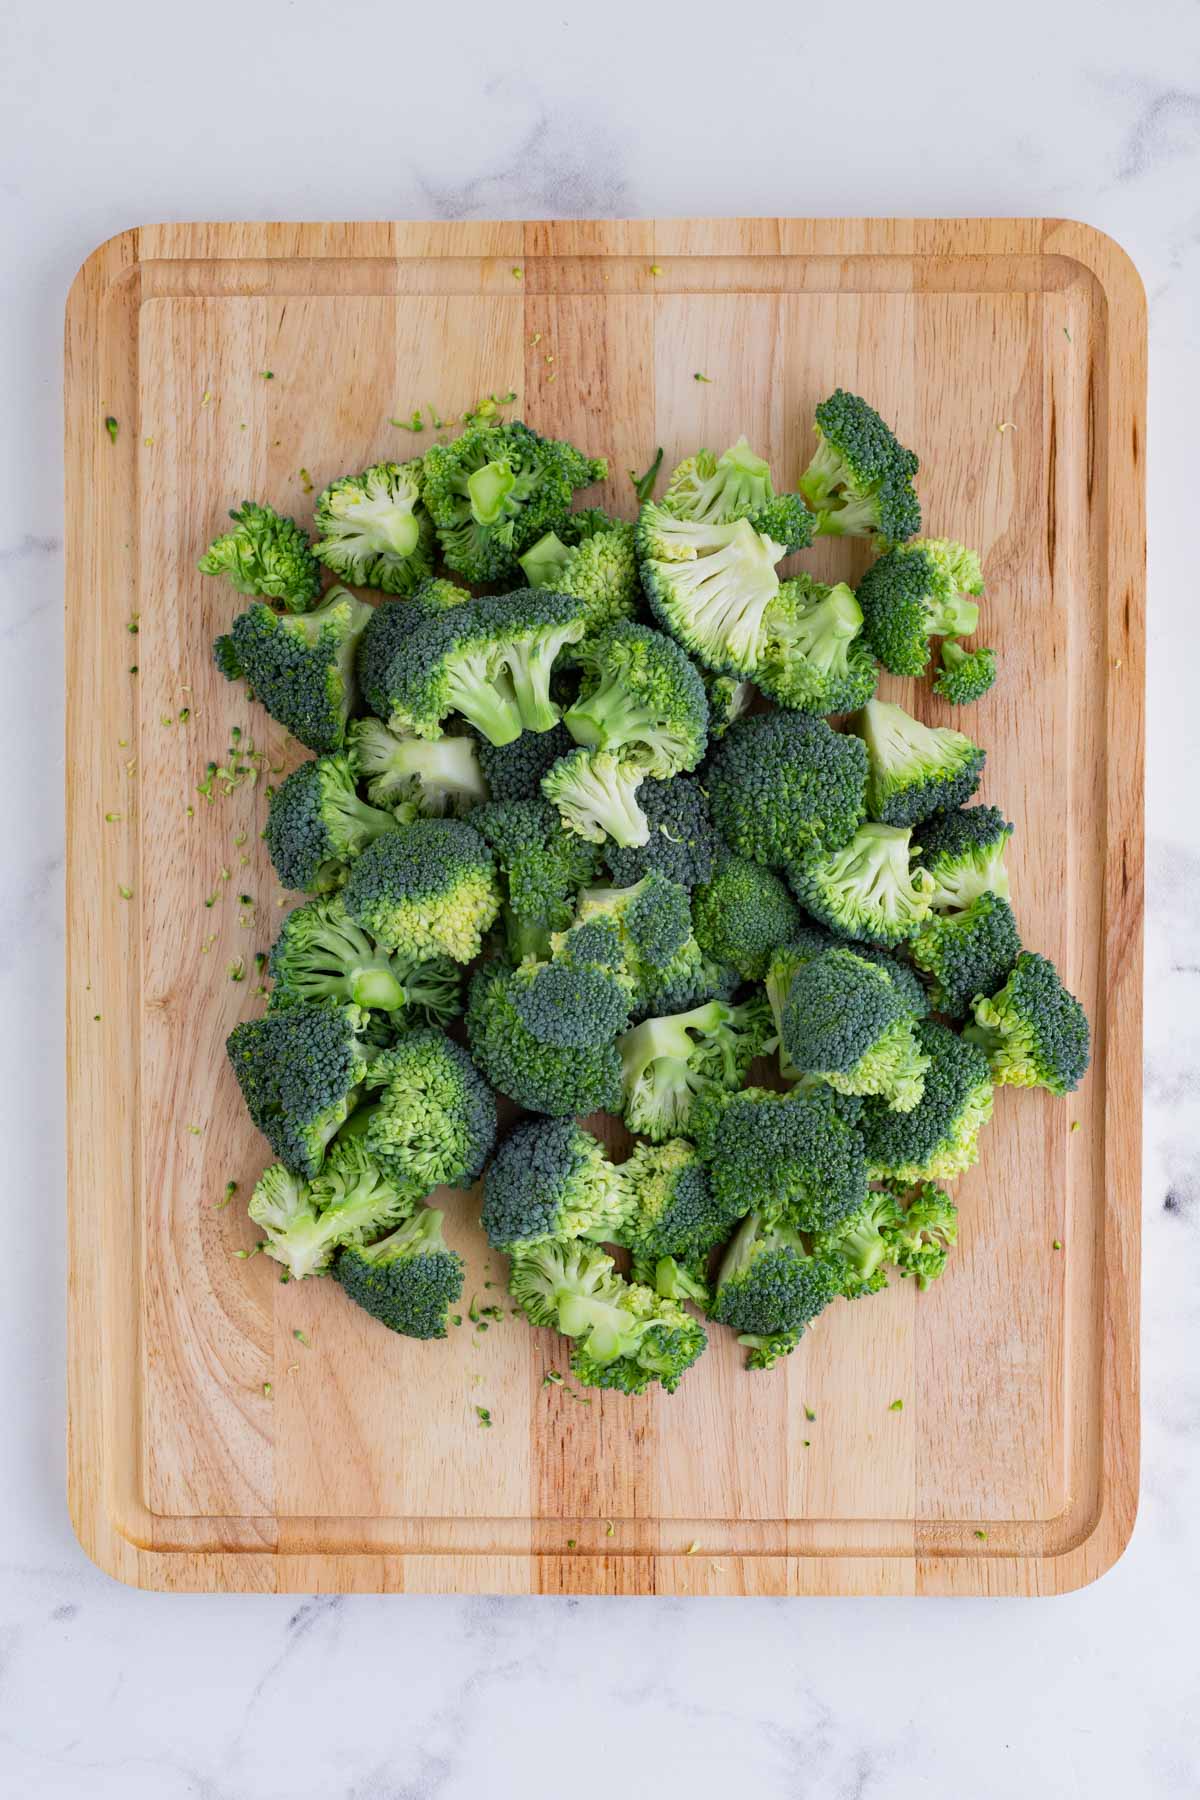 A knife cuts up broccoli florets.